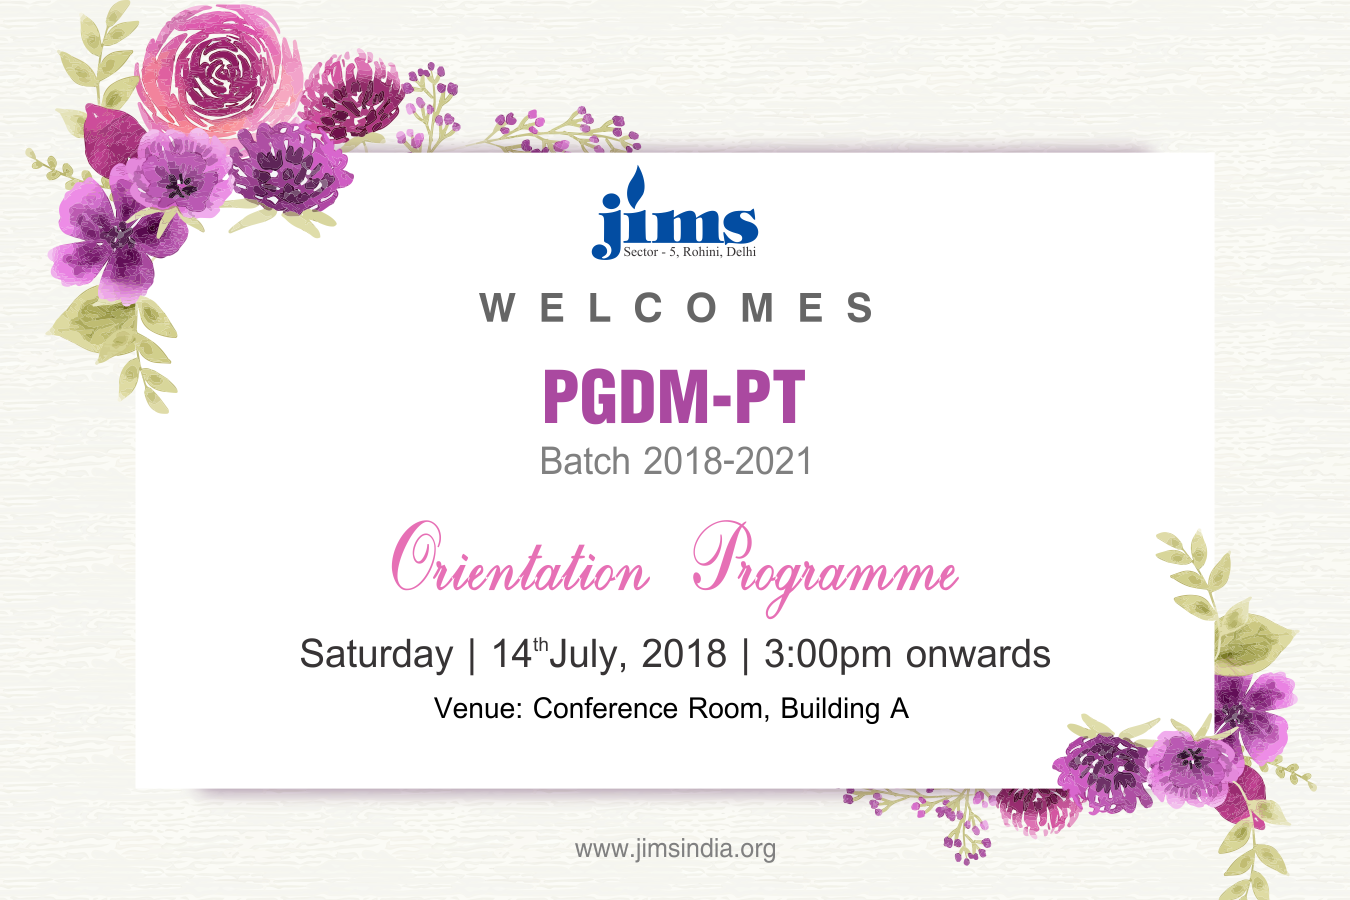 JIMSRohini is organizing ORIENTATION PROGRAMME PGDM-PT (2018-21) on 14th July 2018 at 3:00pm @ JIMS Rohini